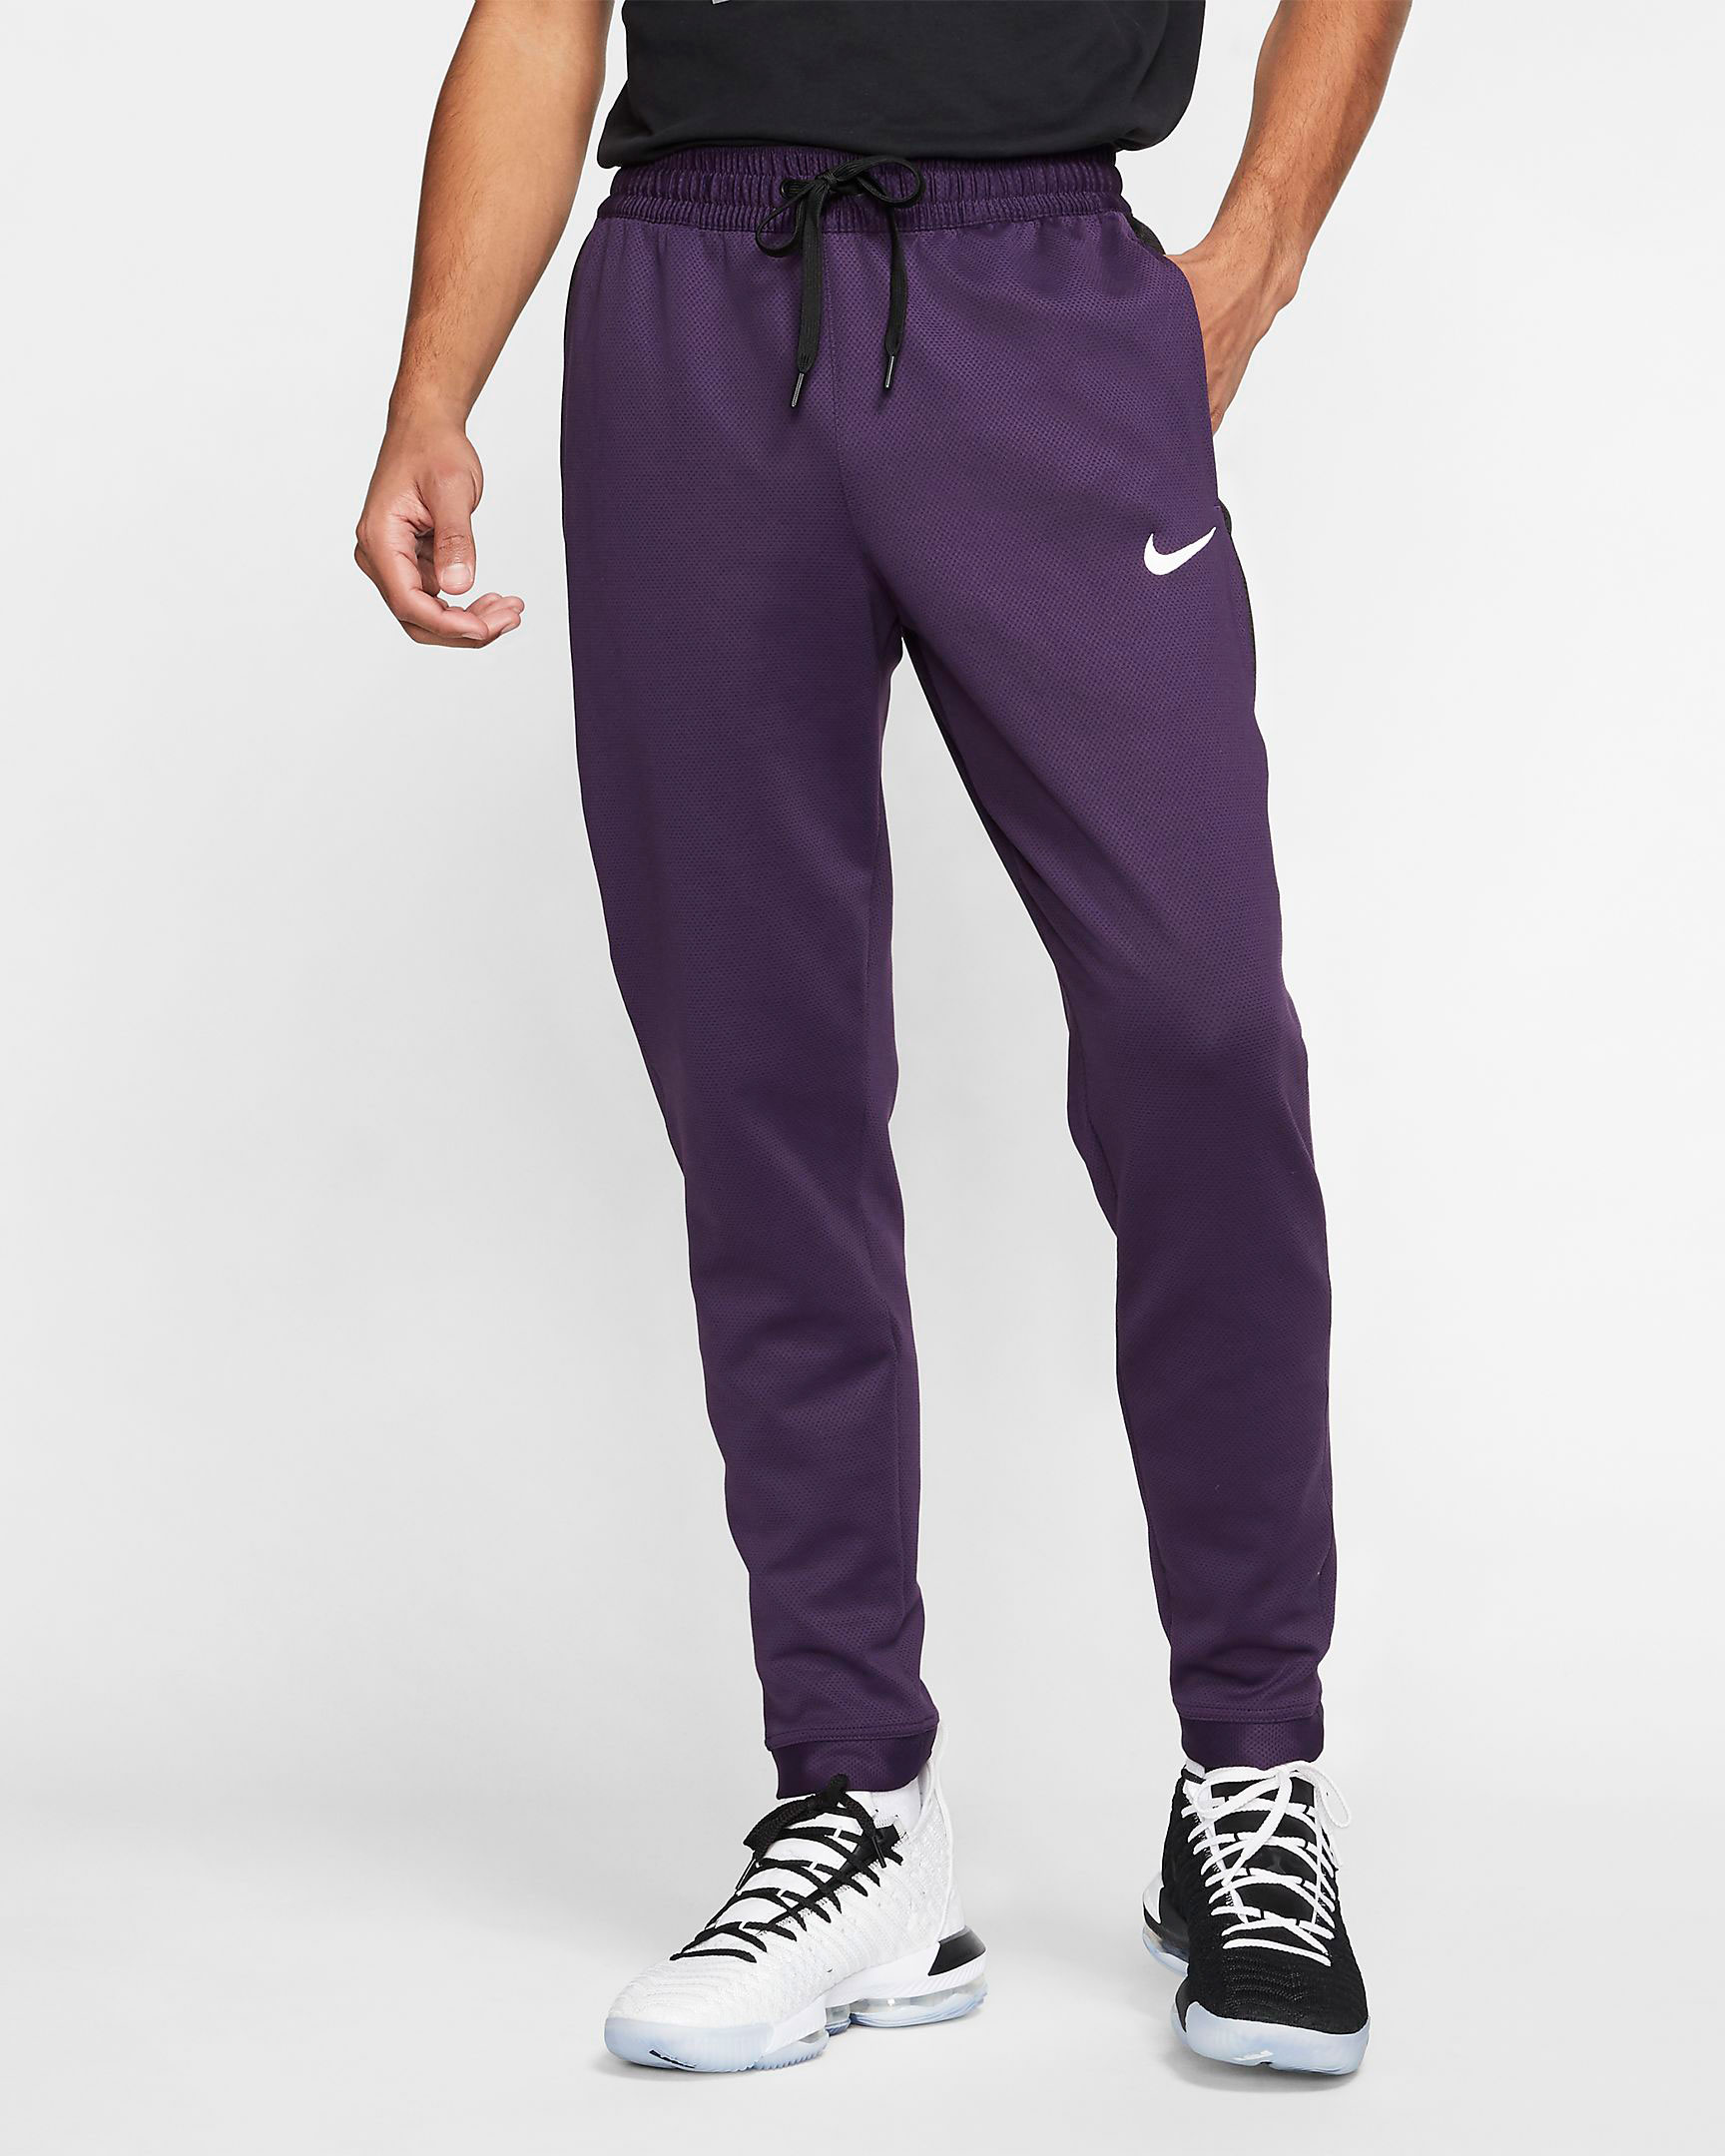 nike-basketball-grand-purple-showtime-pants